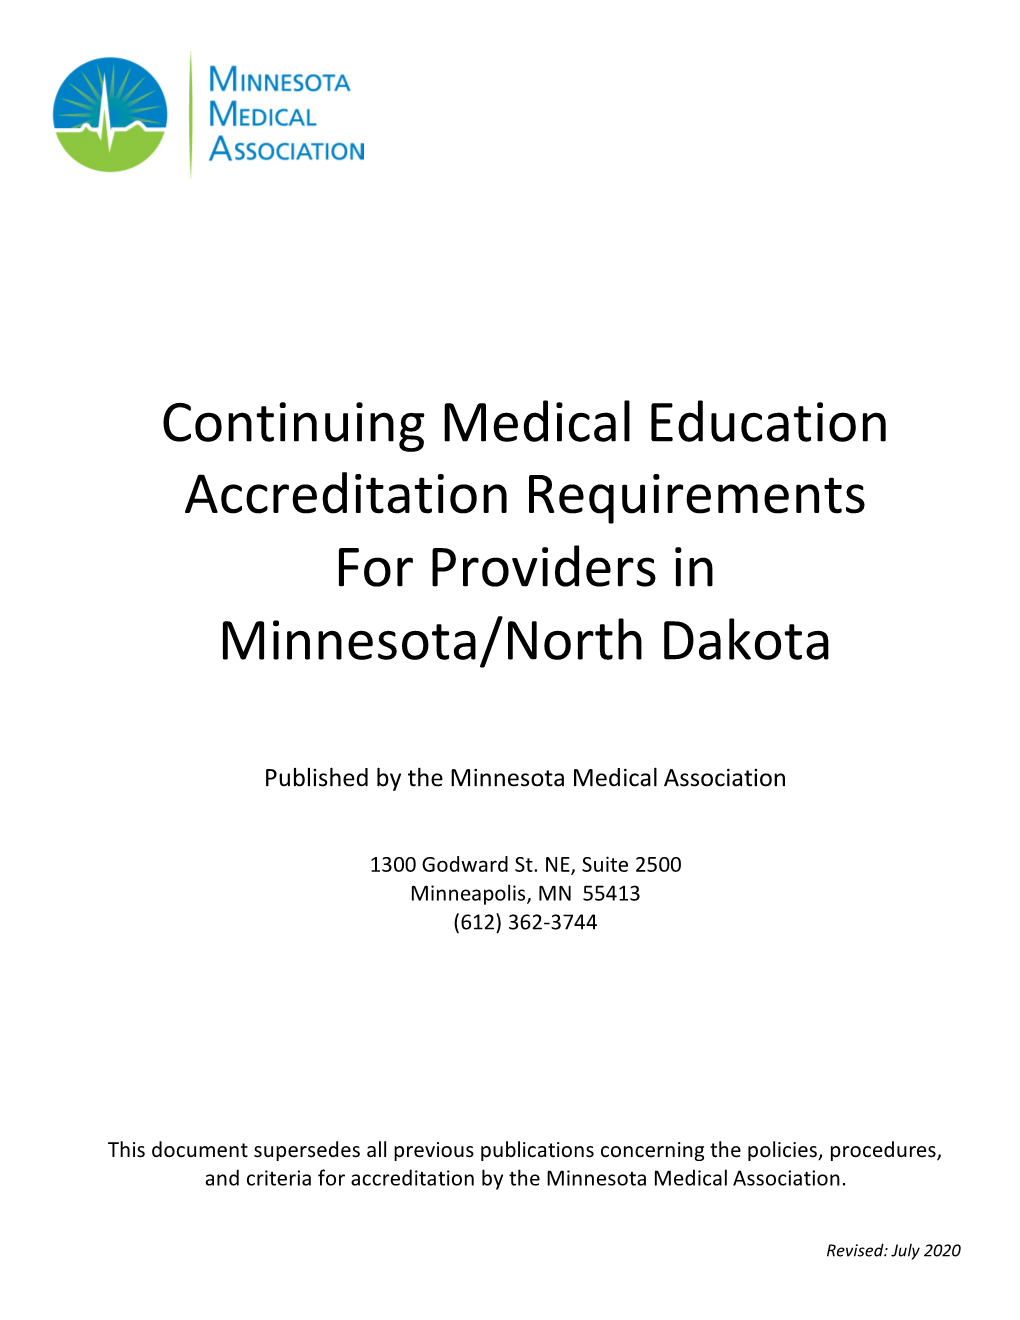 Accreditation Requirements for Providers in Minnesota/North Dakota